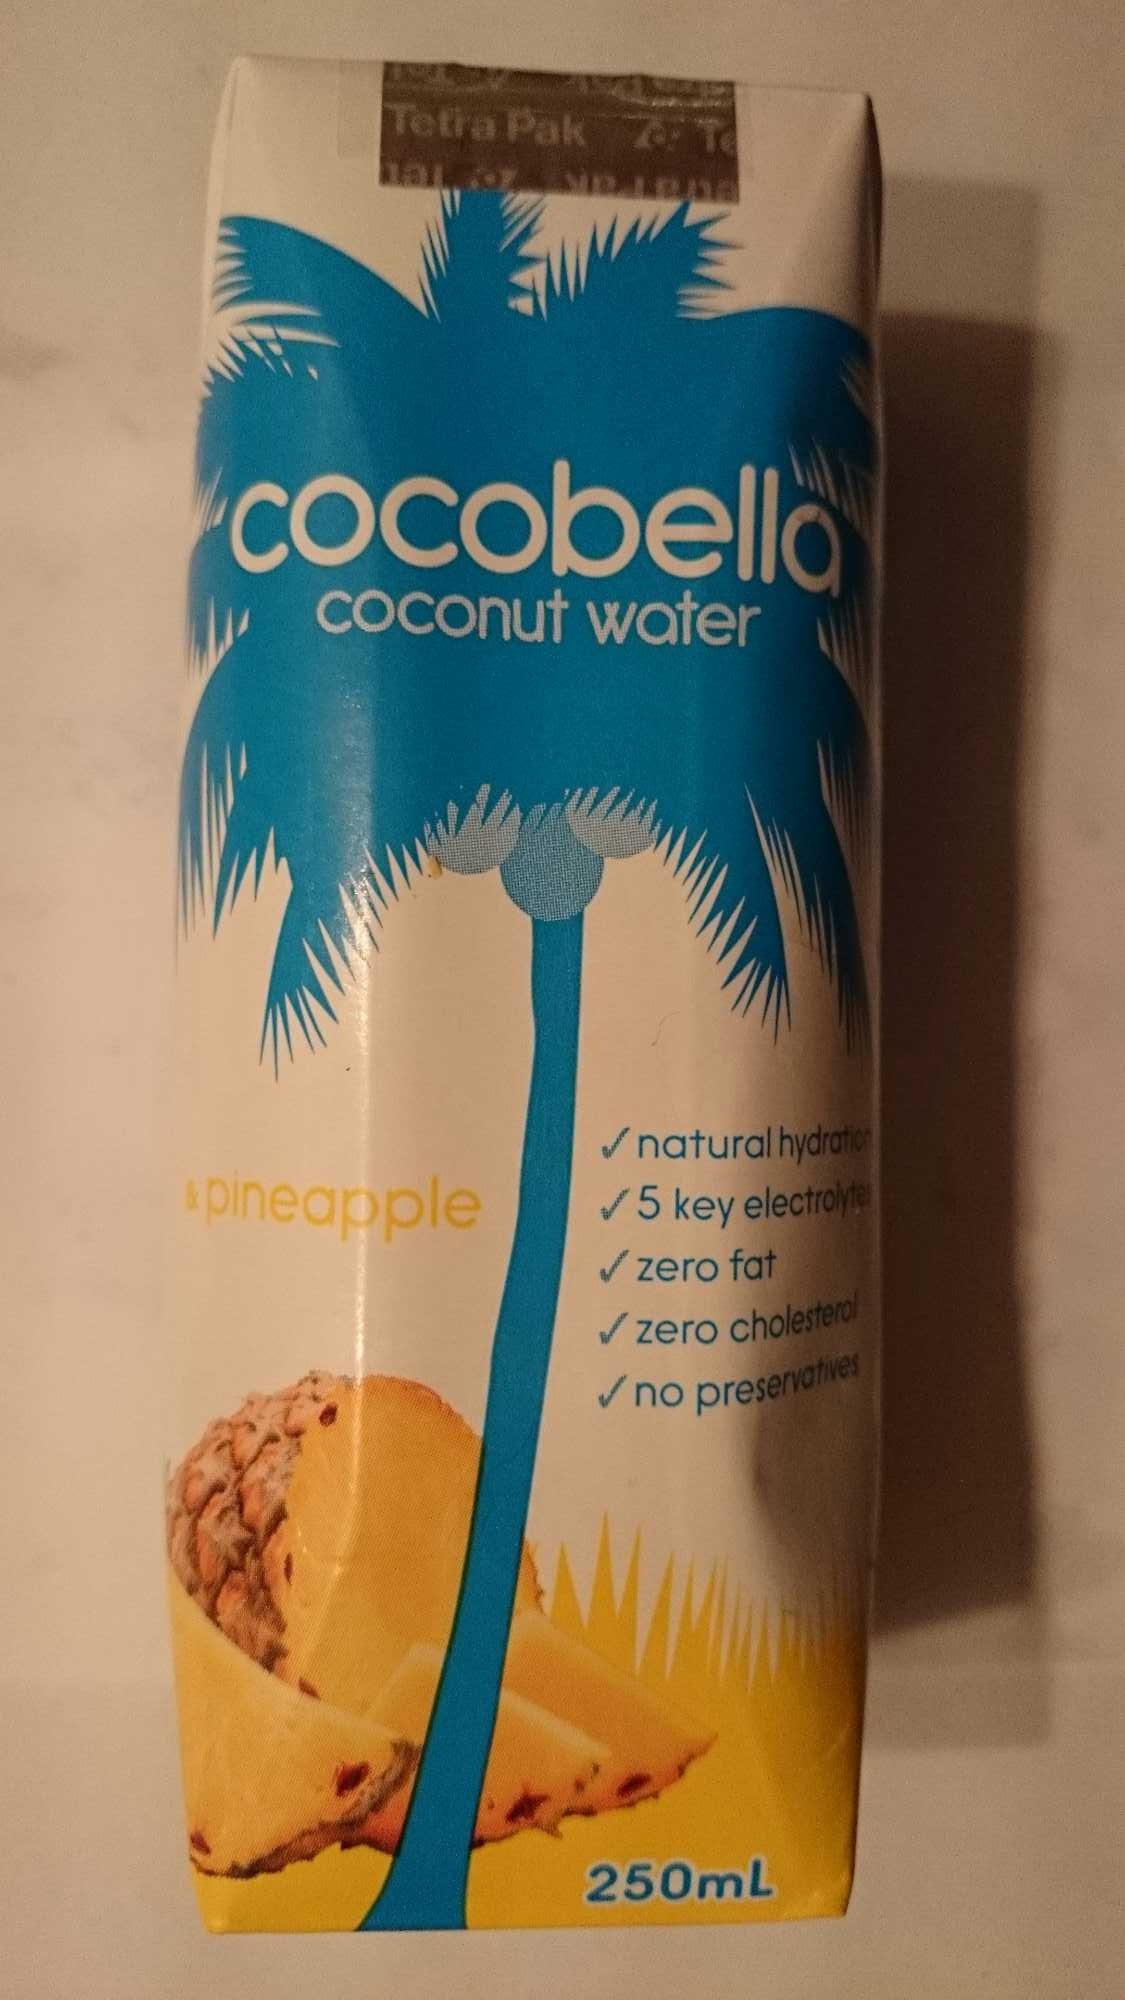 Cocobella Coconut Water Pineapple - Product - en